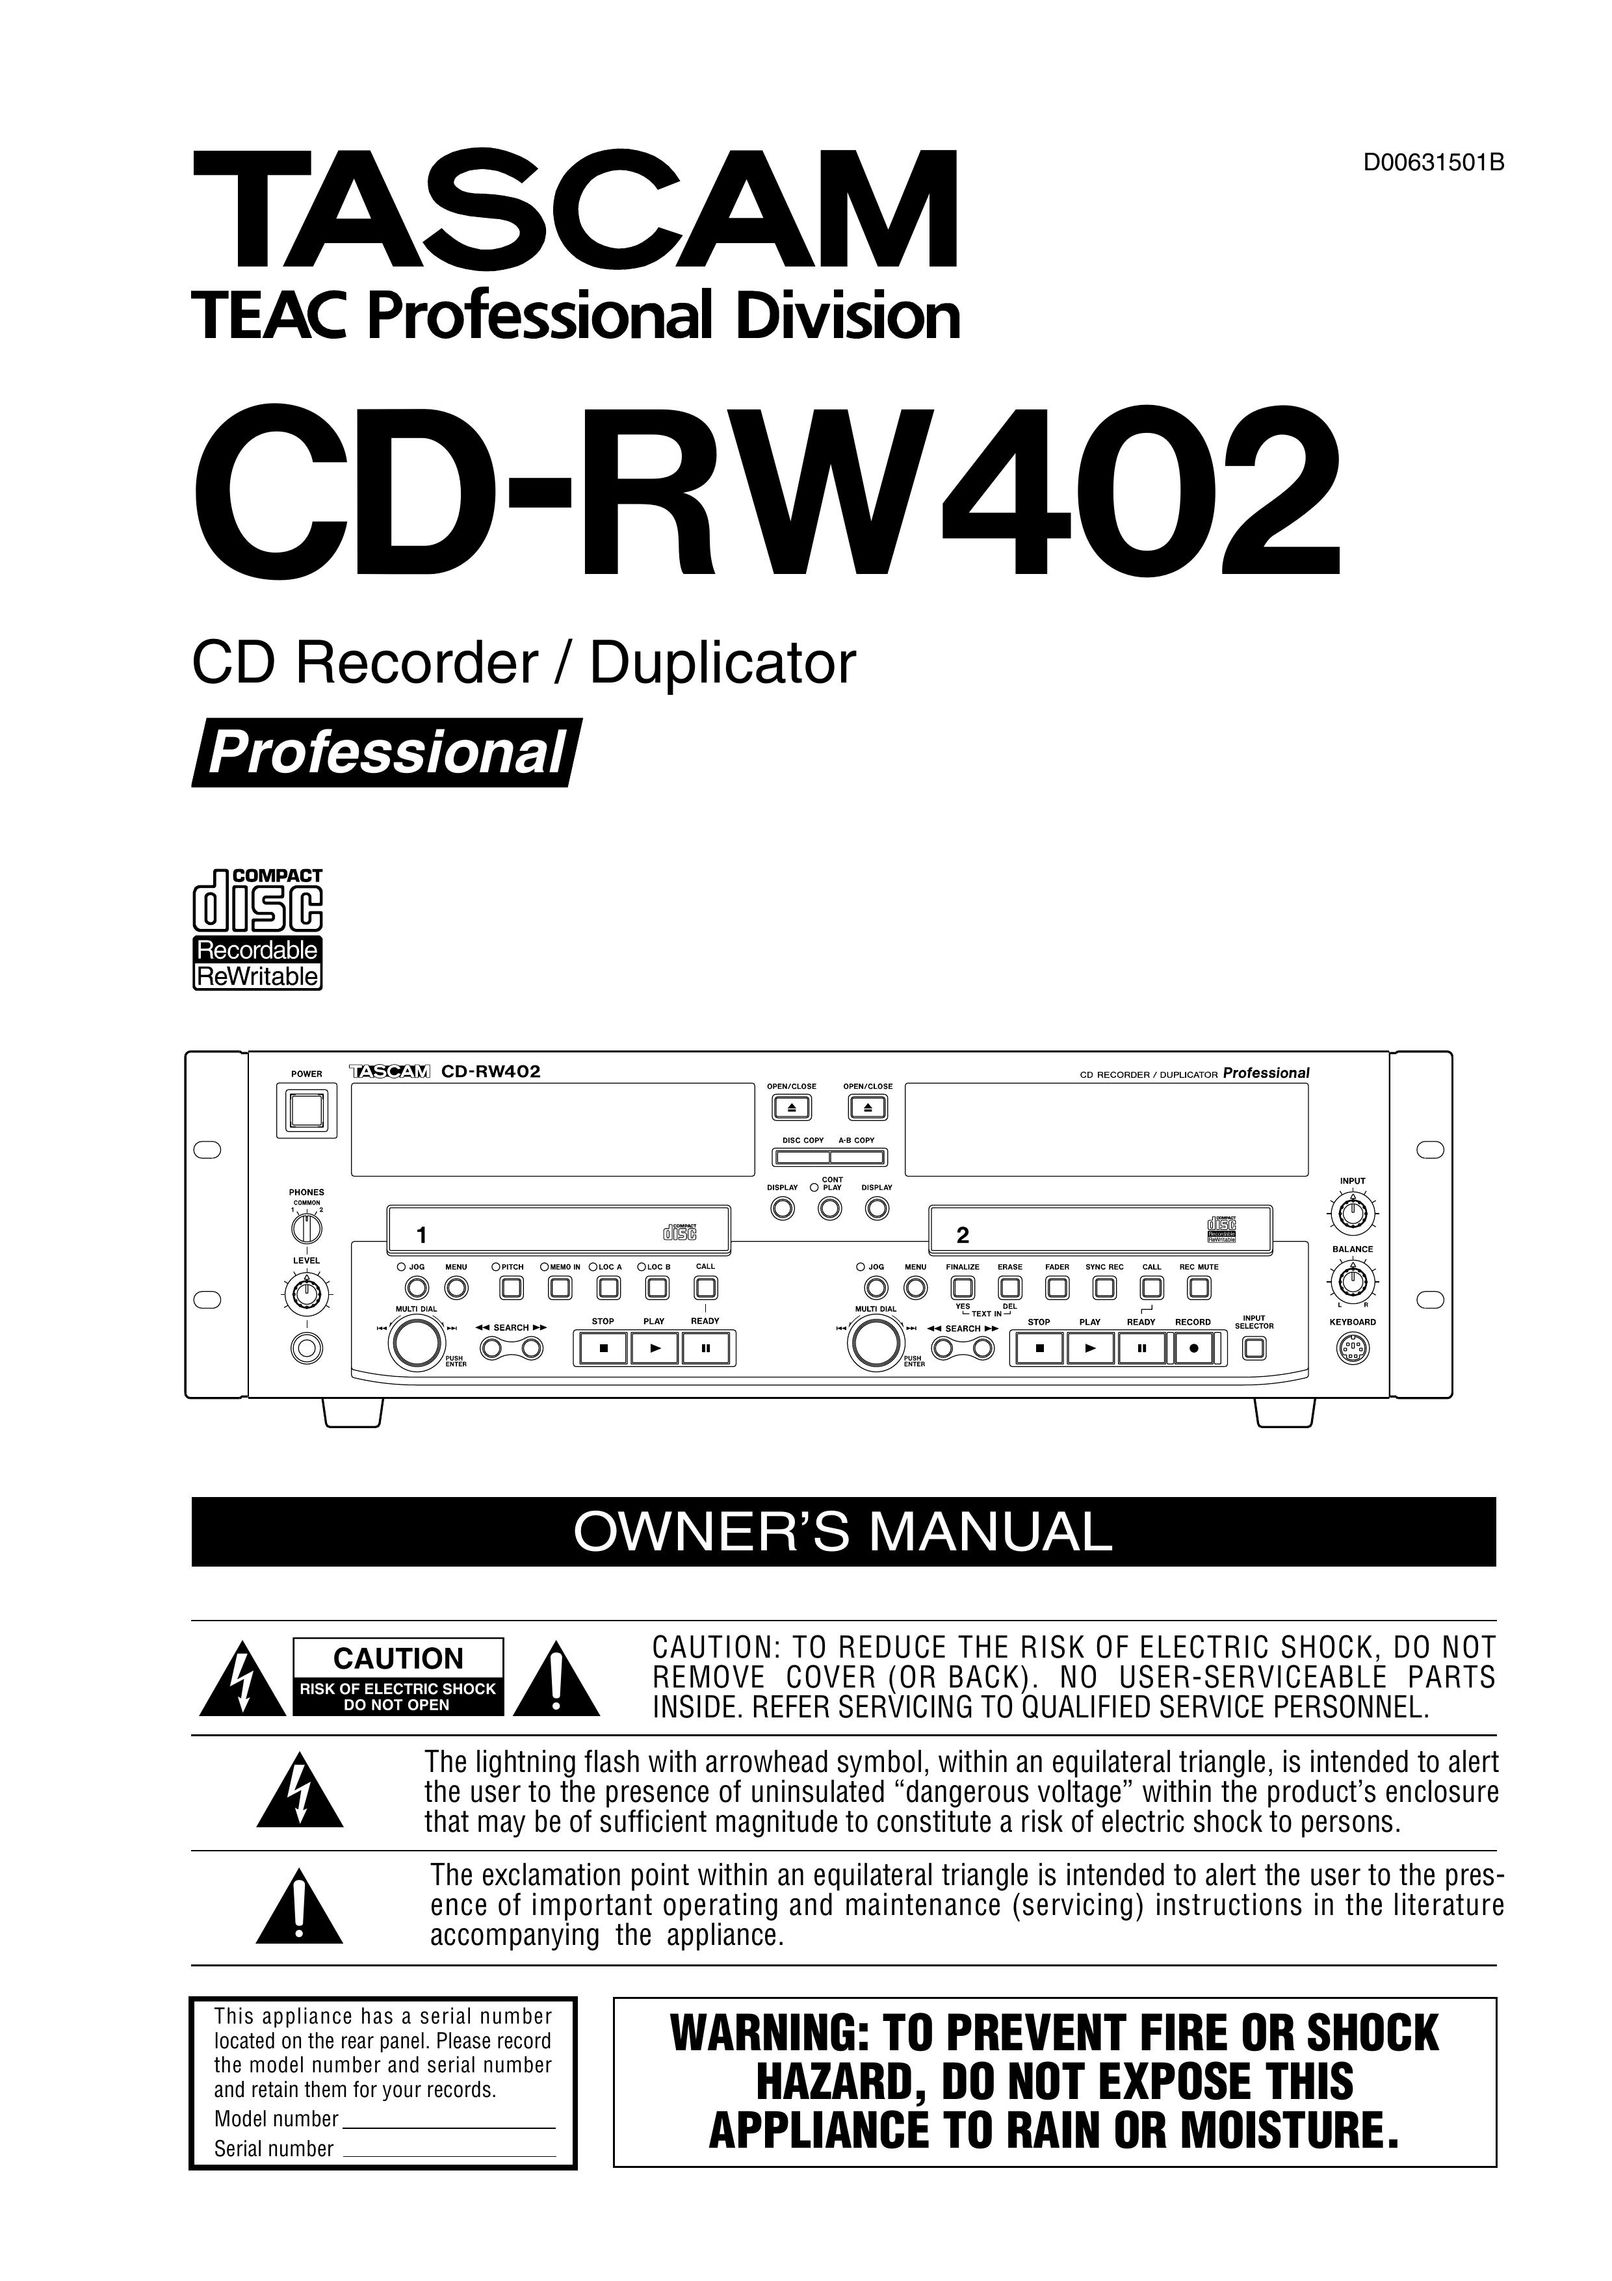 Tascam CD-RW402 Dishwasher User Manual